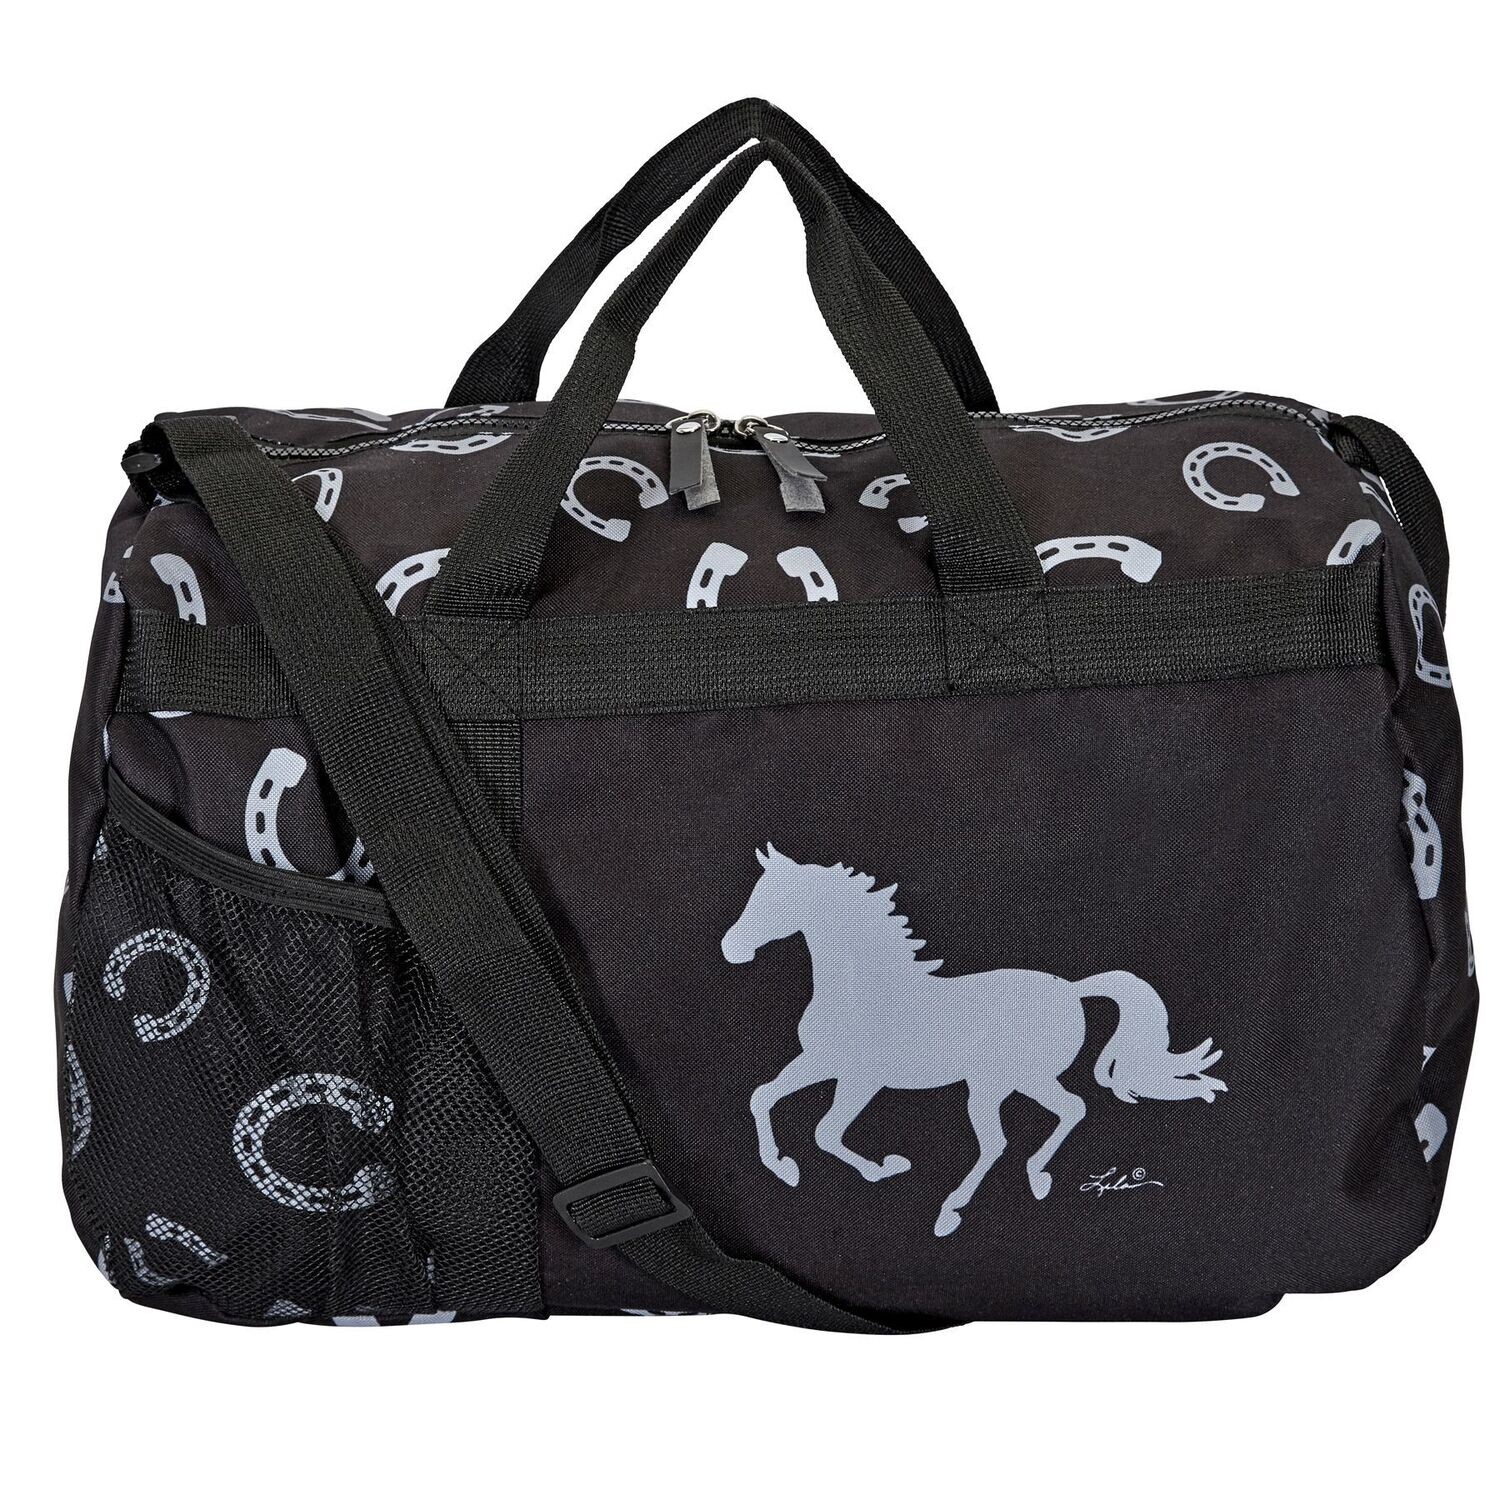 Duffle Bag - Grey Horse with Horseshoes